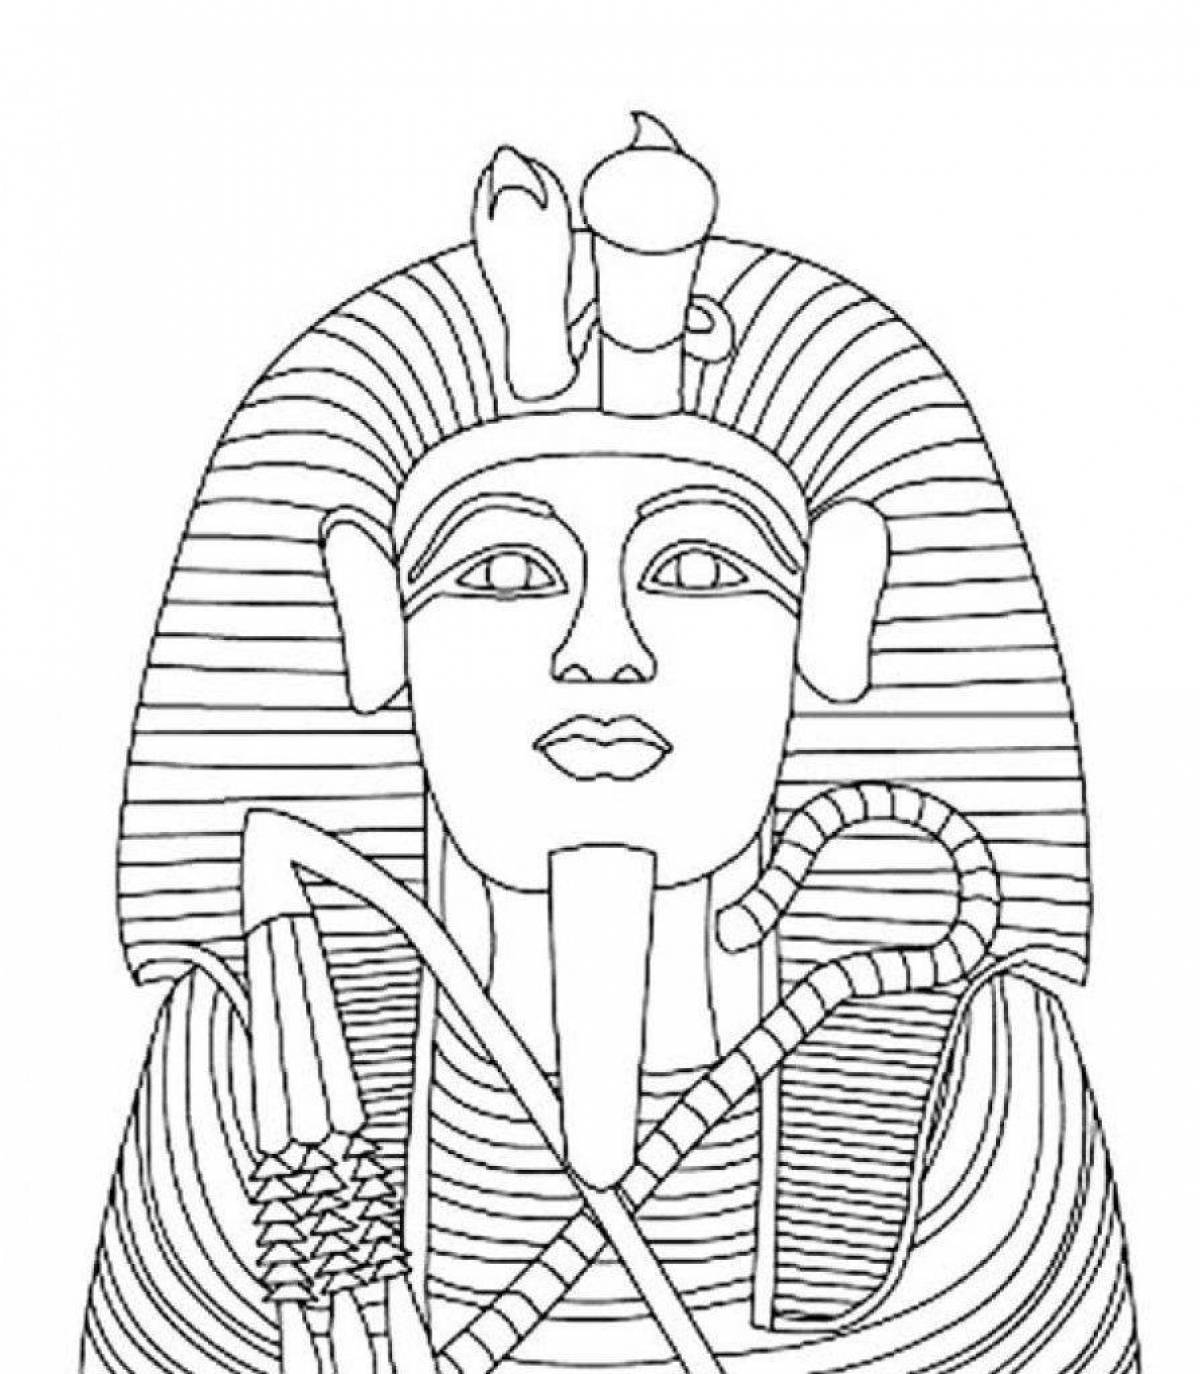 Эскиз маска фараона. Маска фараона Тутанхамона рисунок. Фараон Египет раскраска Тутанхамон. Египетский фараон Тутанхамон раскраска. Тутанхамон фараон древнего Египта рисунок.